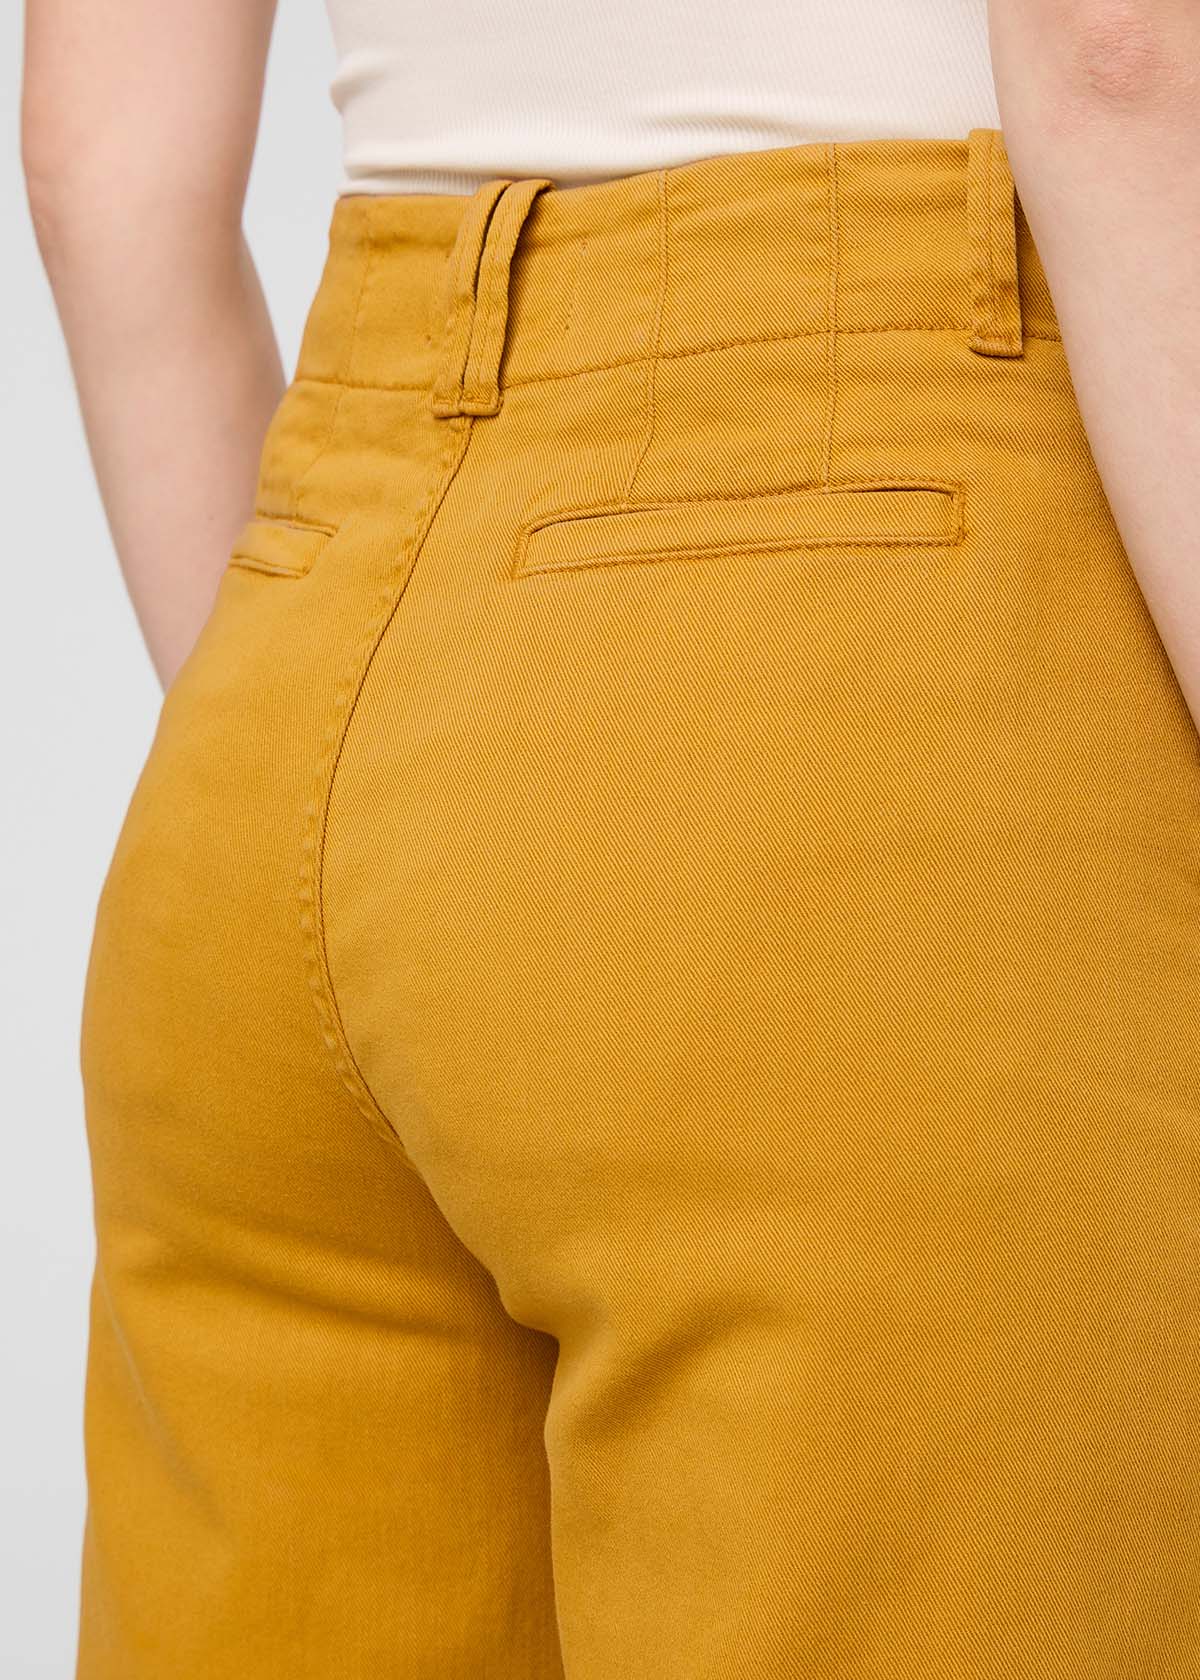 womens yellow high rise trouser back pocket detail